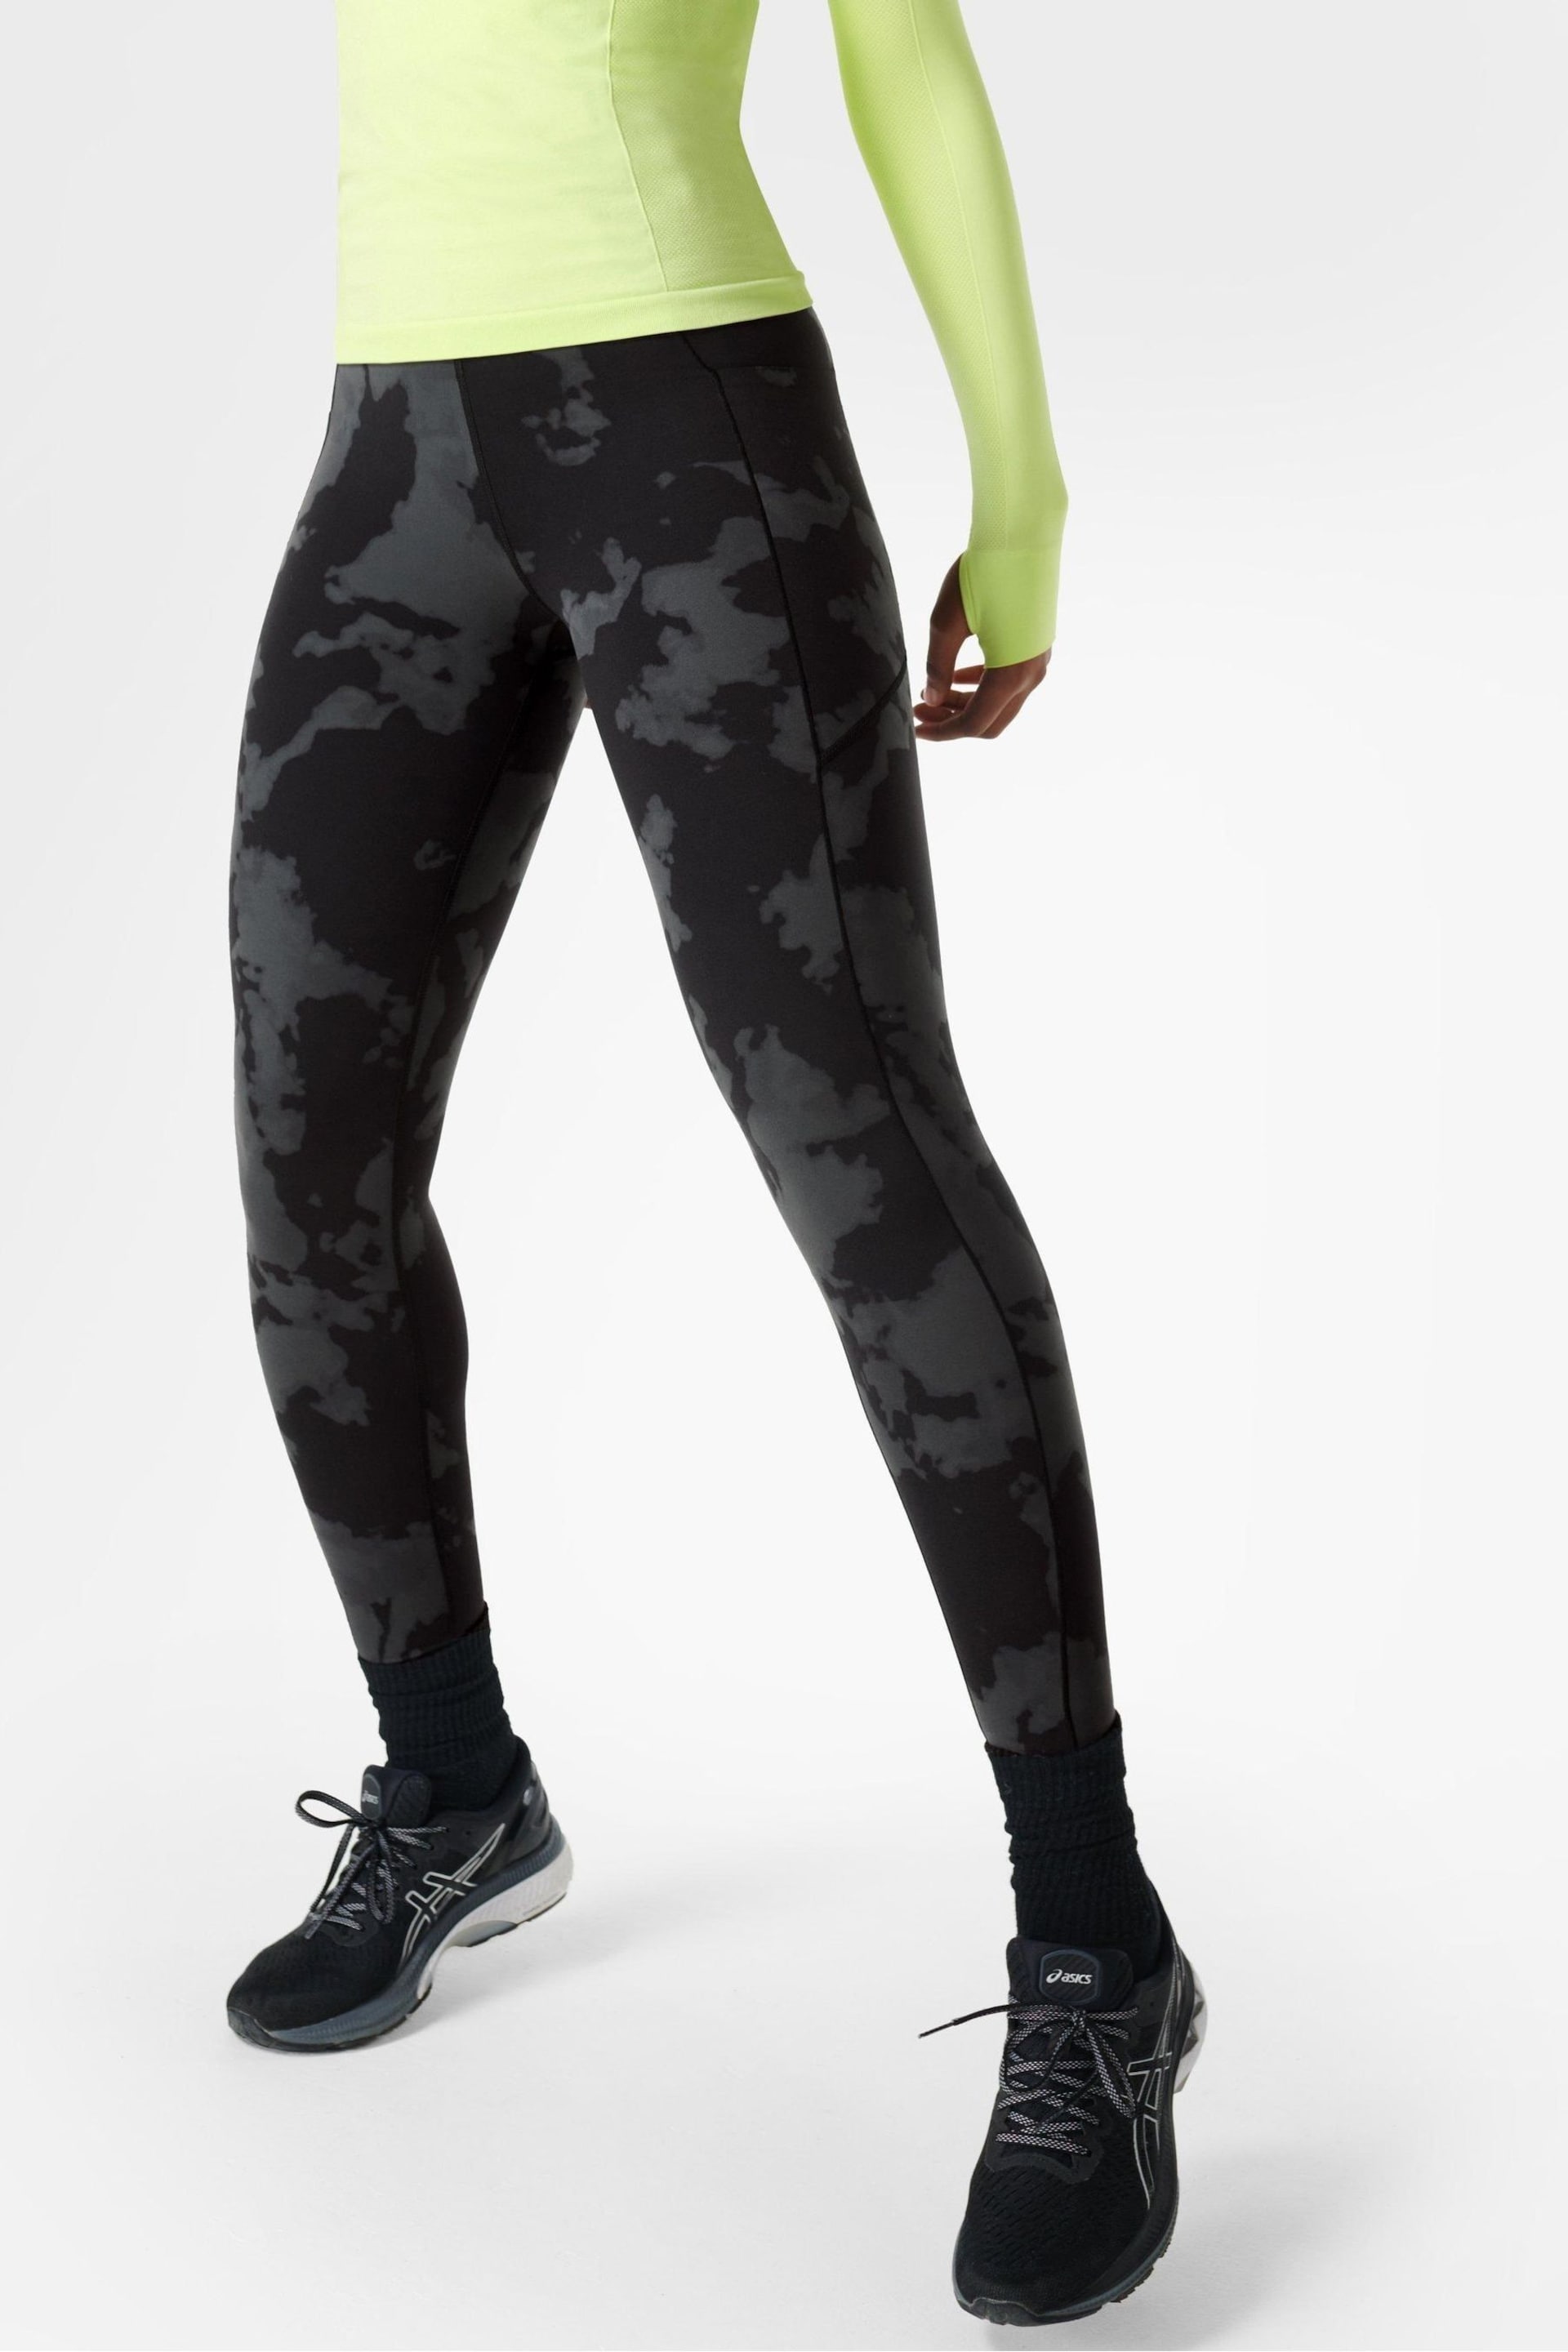 Sweaty Betty Black Fade Print Full Length Power UltraSculpt High Waist Workout Leggings - Image 1 of 6